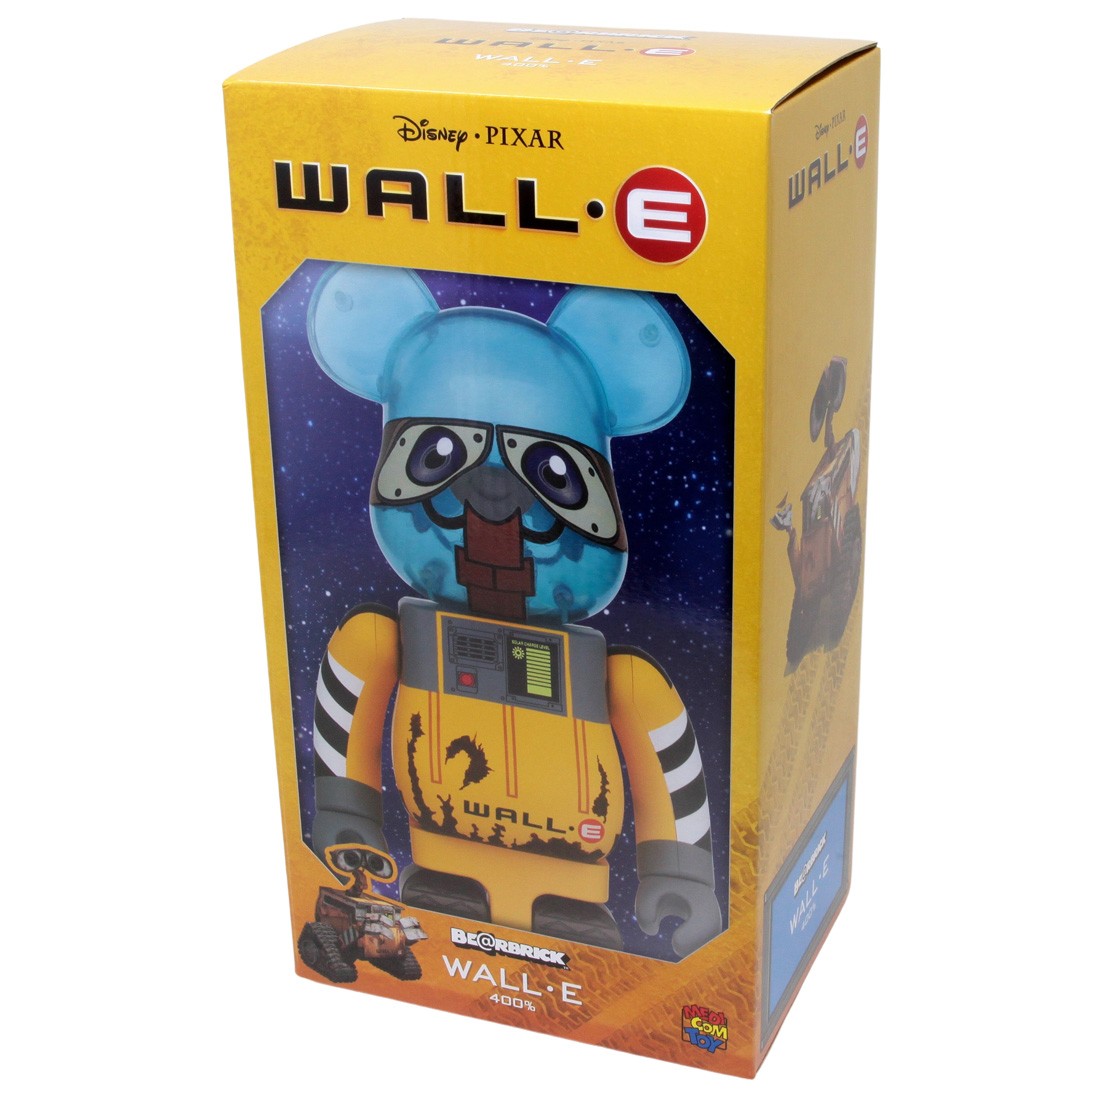 Medicom Disney Pixar Wall-E - Wall-E 400% Bearbrick Figure (yellow)